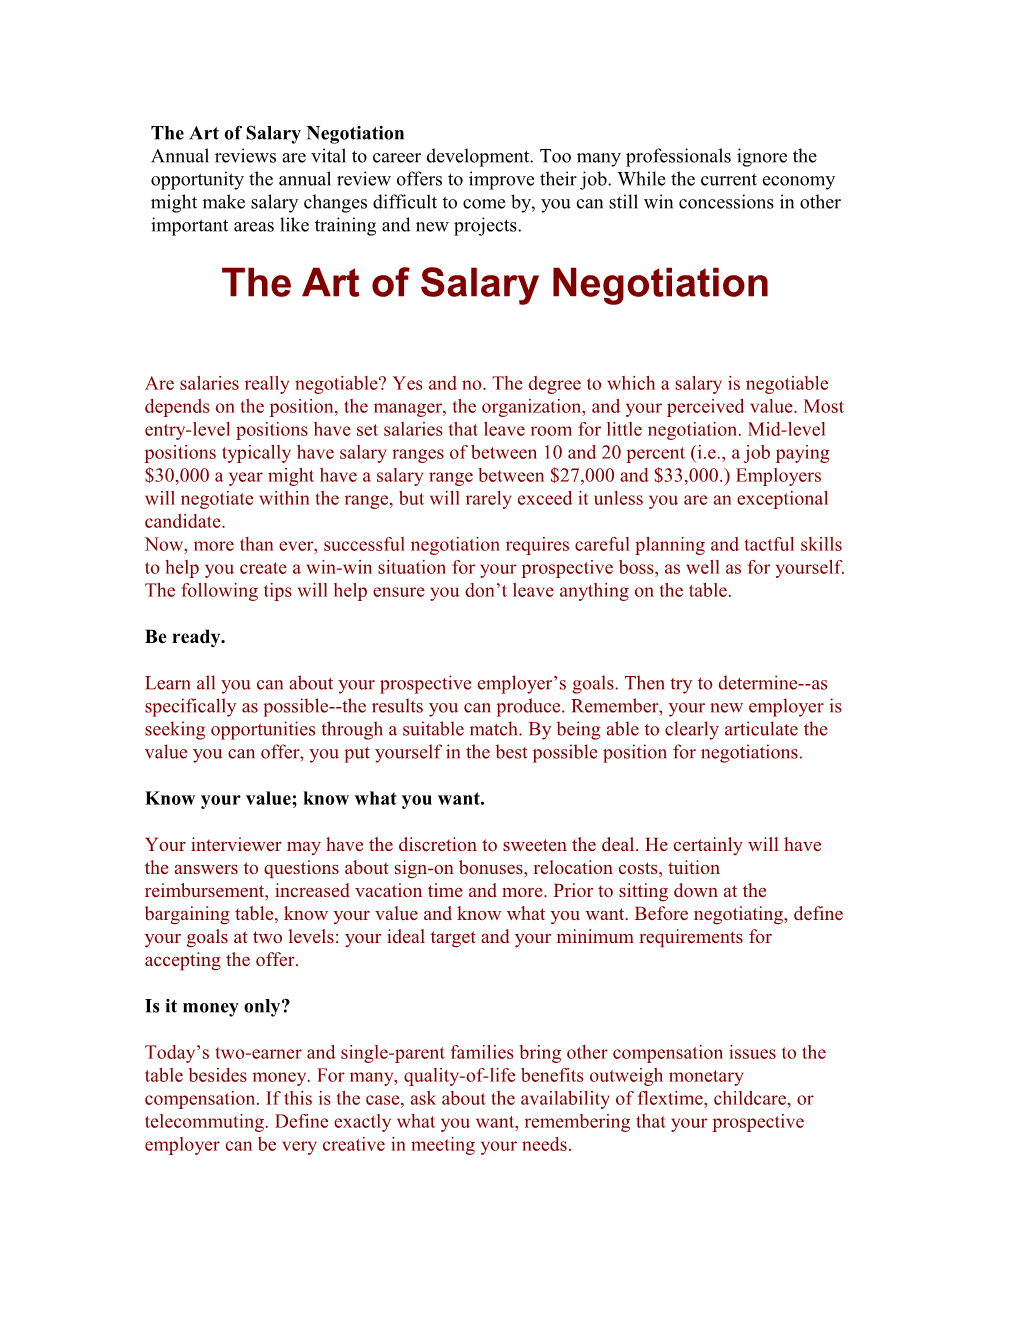 The Art of Salary Negotiation